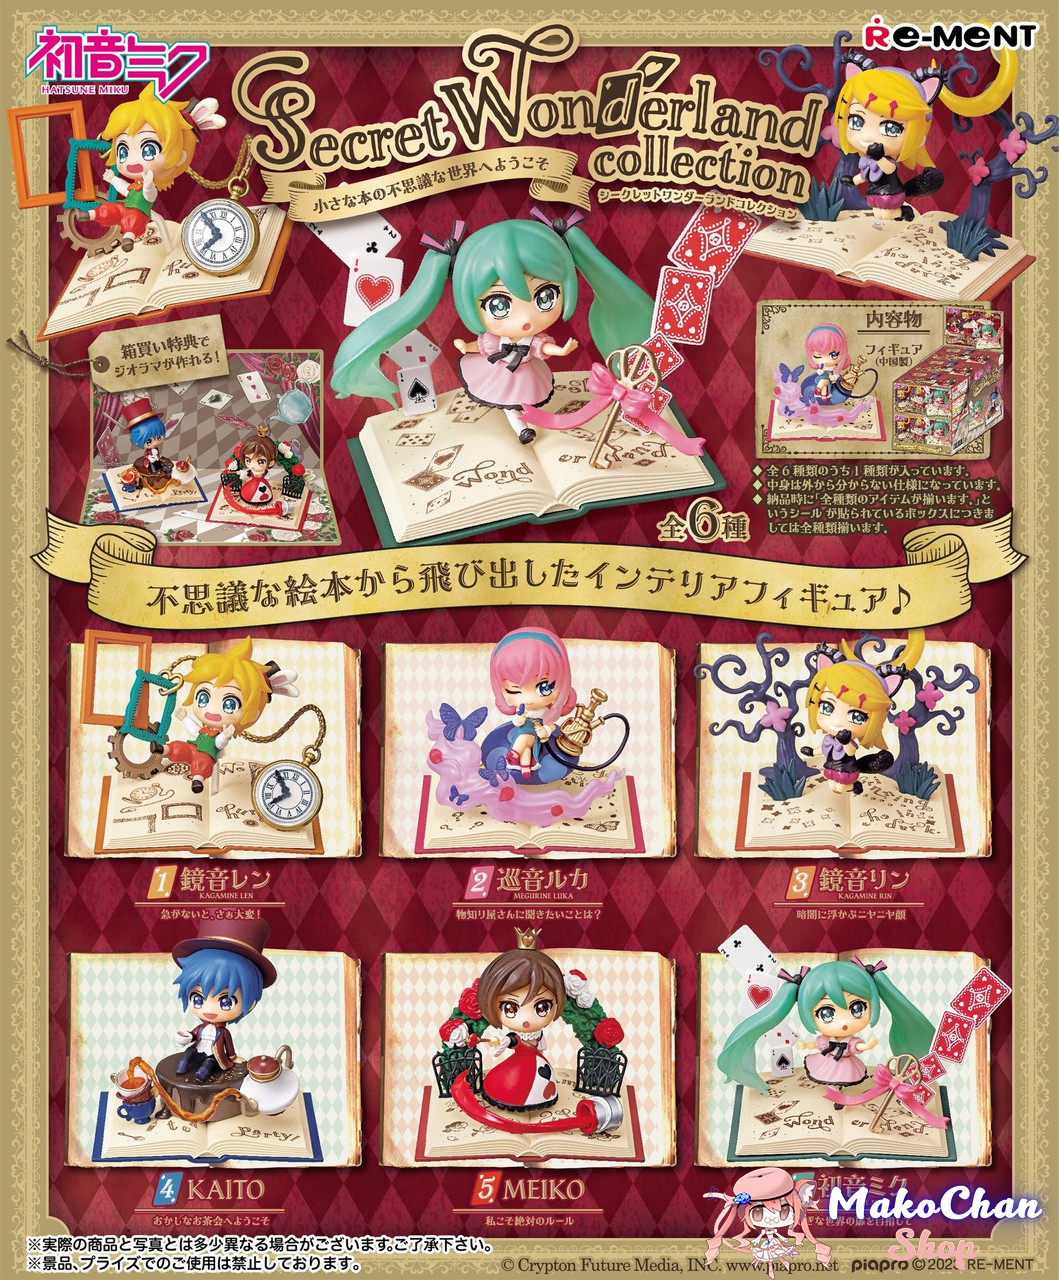 Re-ment Hatsune Miku Secret Wonderland Collection